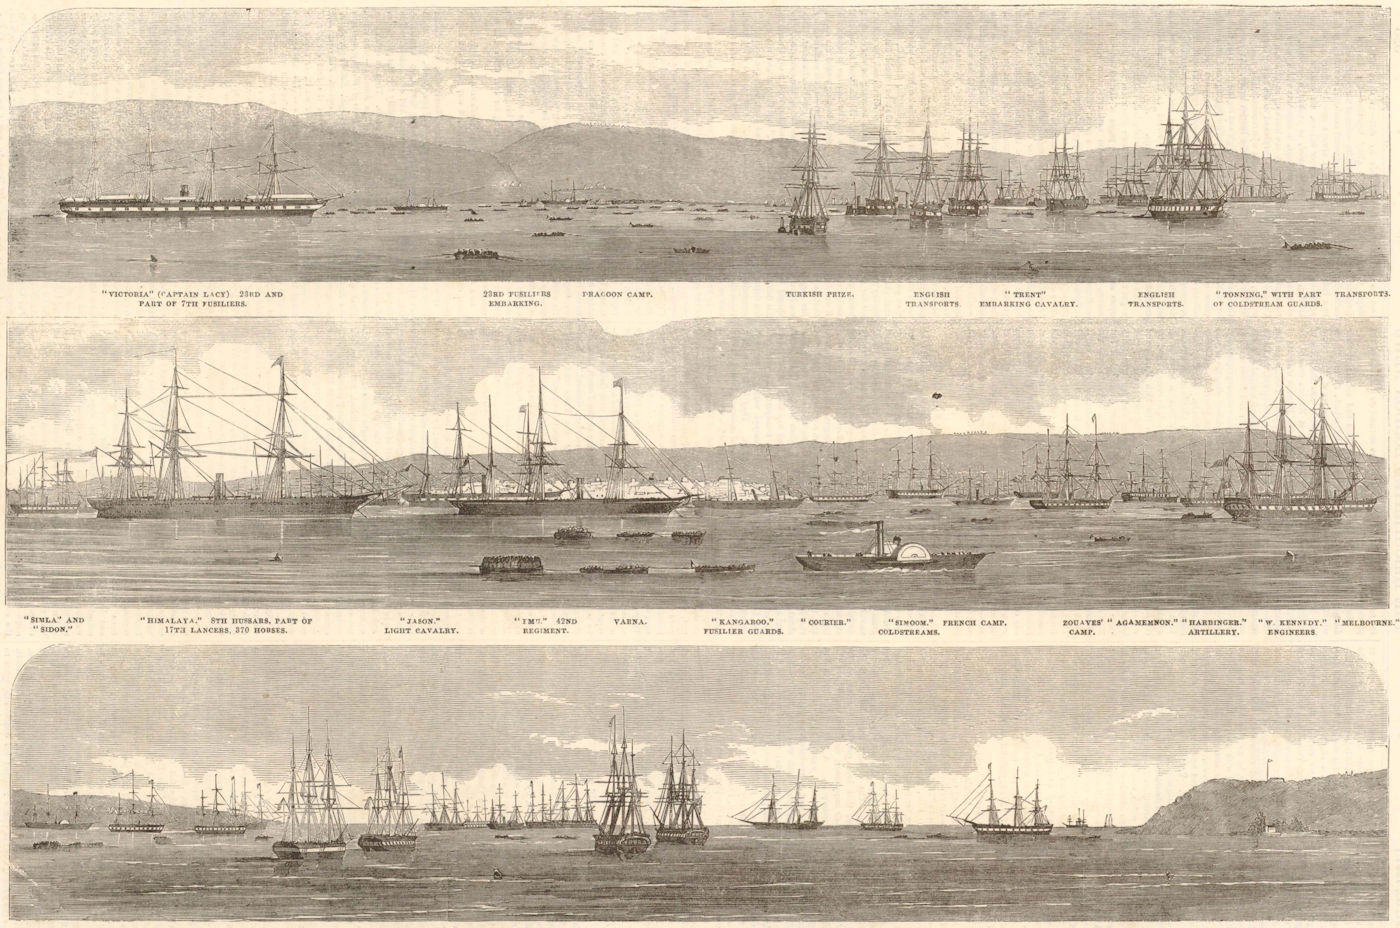 Associate Product The Transport Fleet Embarking The Troops, At Varna. Bulgaria. Crimean War 1854